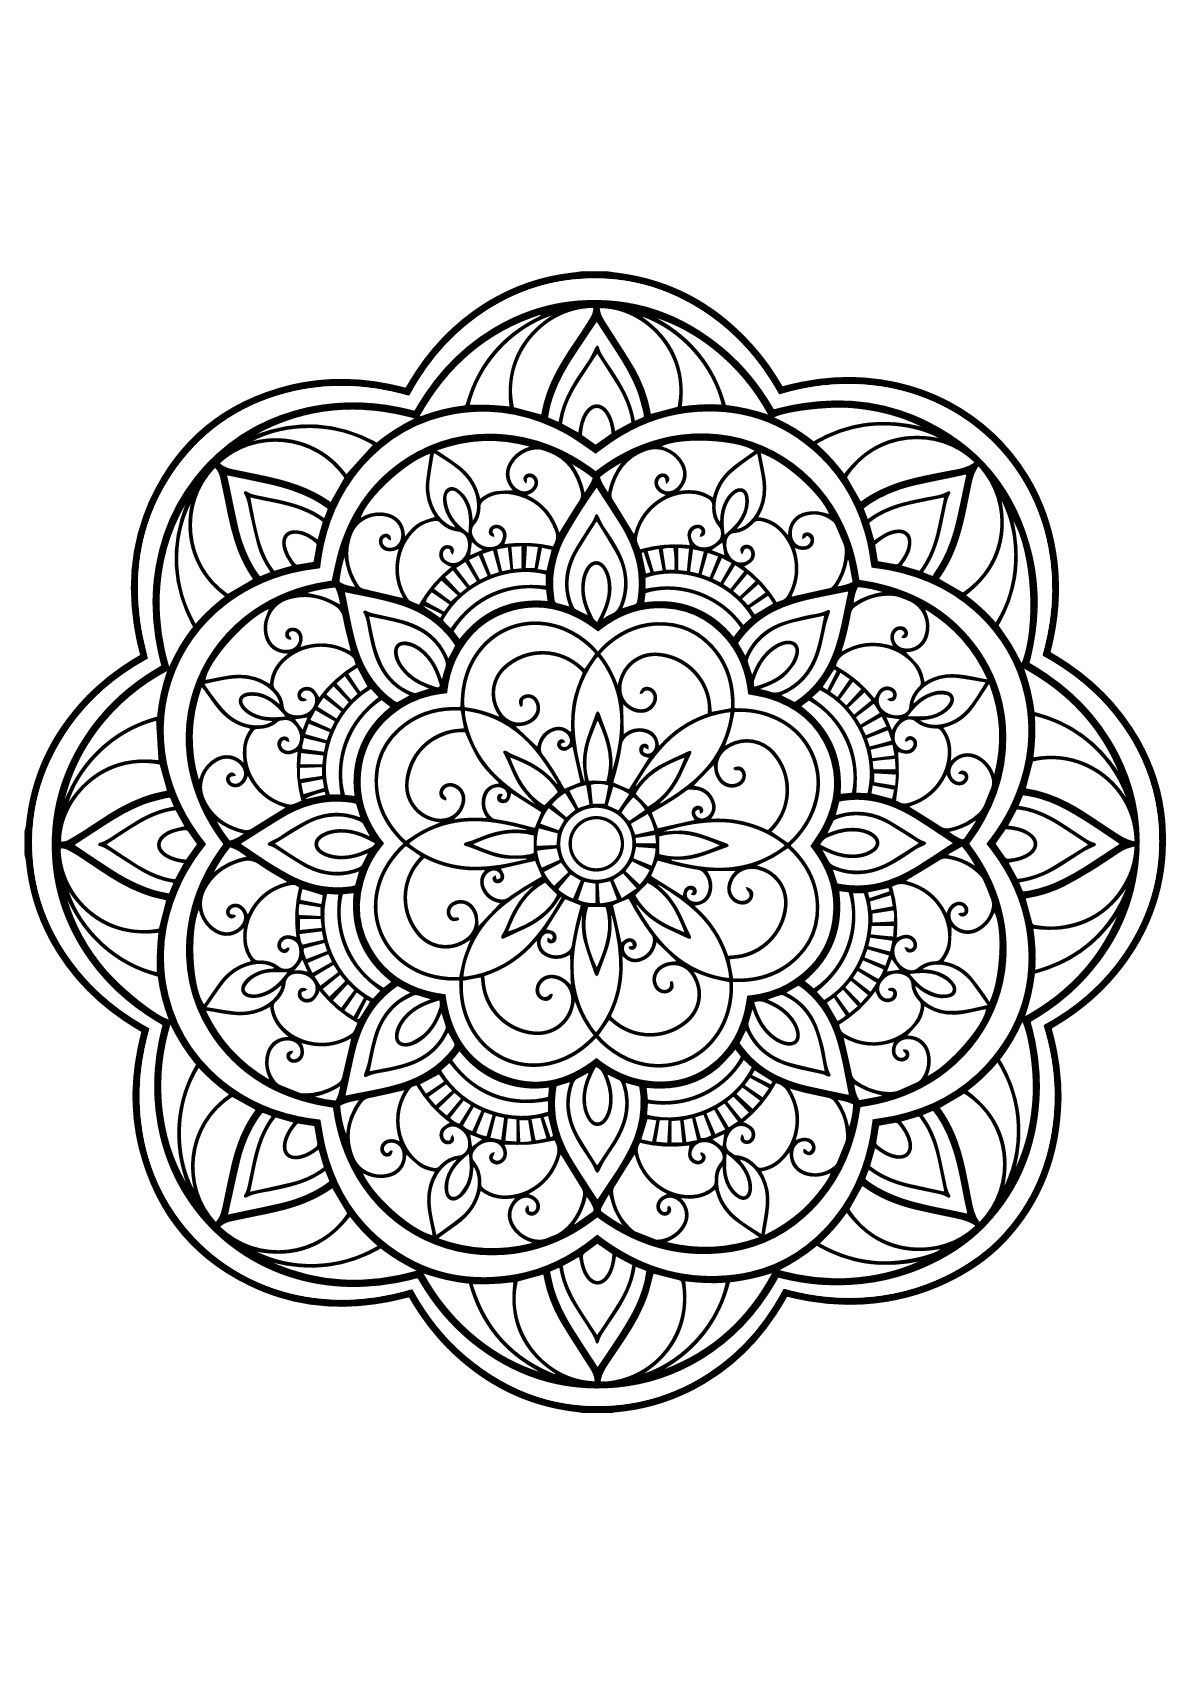 Download Mandala from free coloring books for adults 14 - Mandalas ...